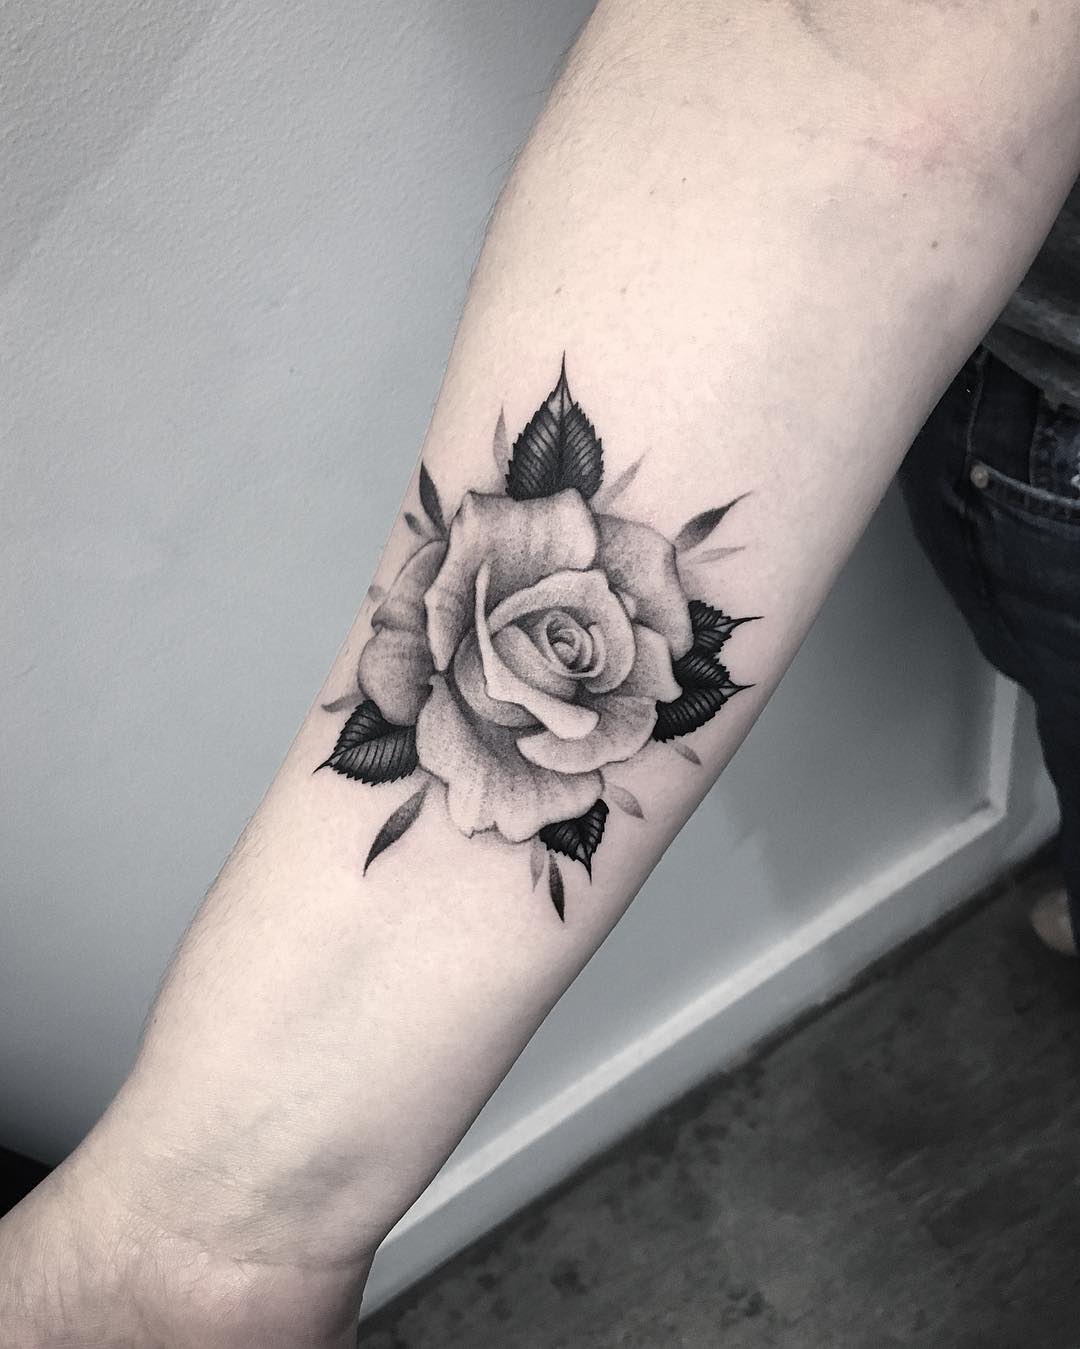 Inked rose on arm by lazerliz